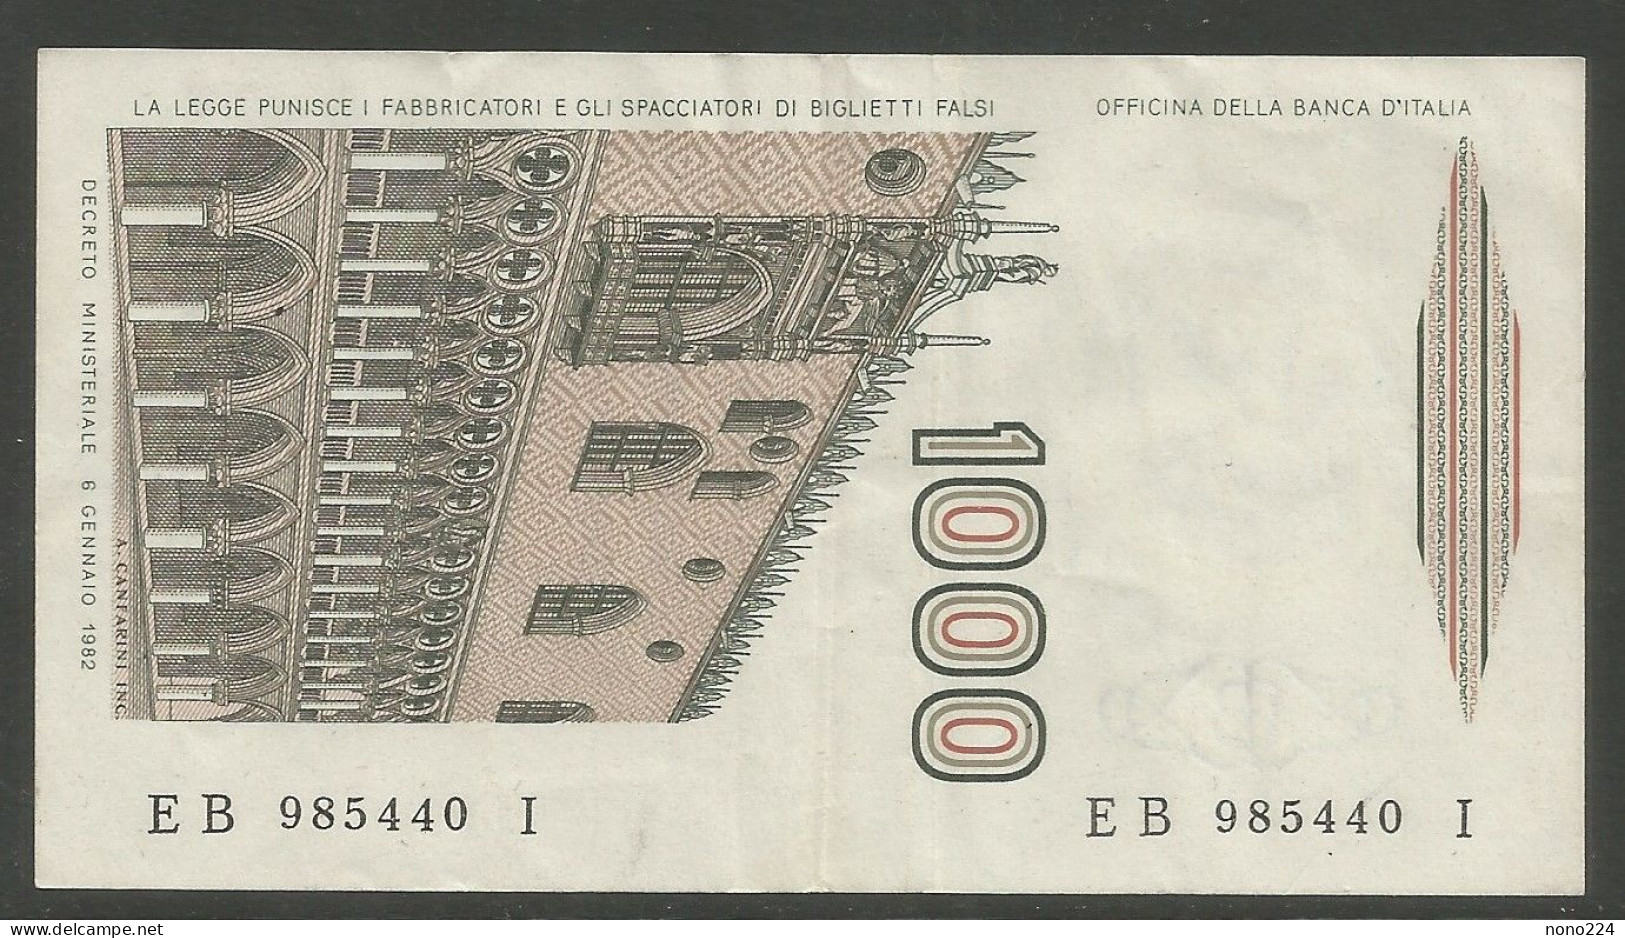 Billet De 1982 ( Italie 1000 Lire ) - 1000 Liras